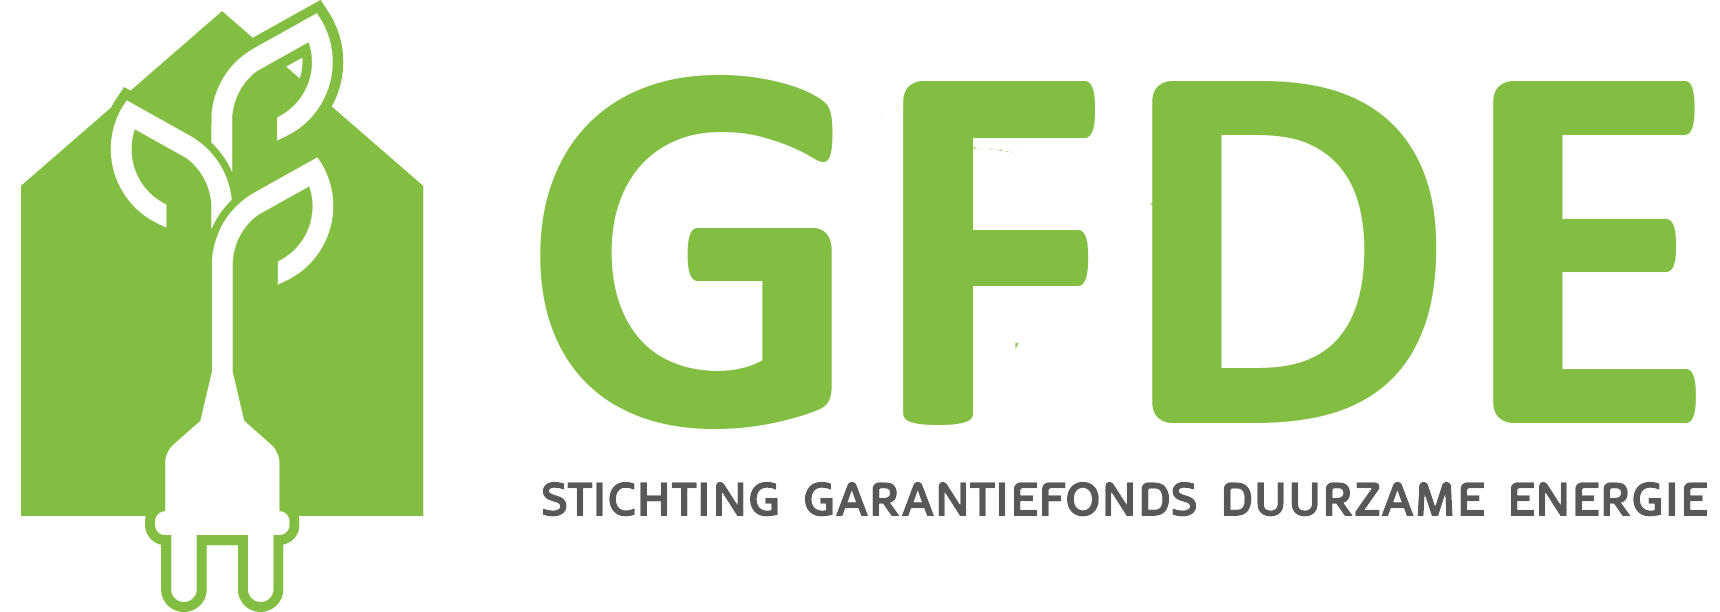 Stichting Garantiefonds Duurzame Energie (GFDE)